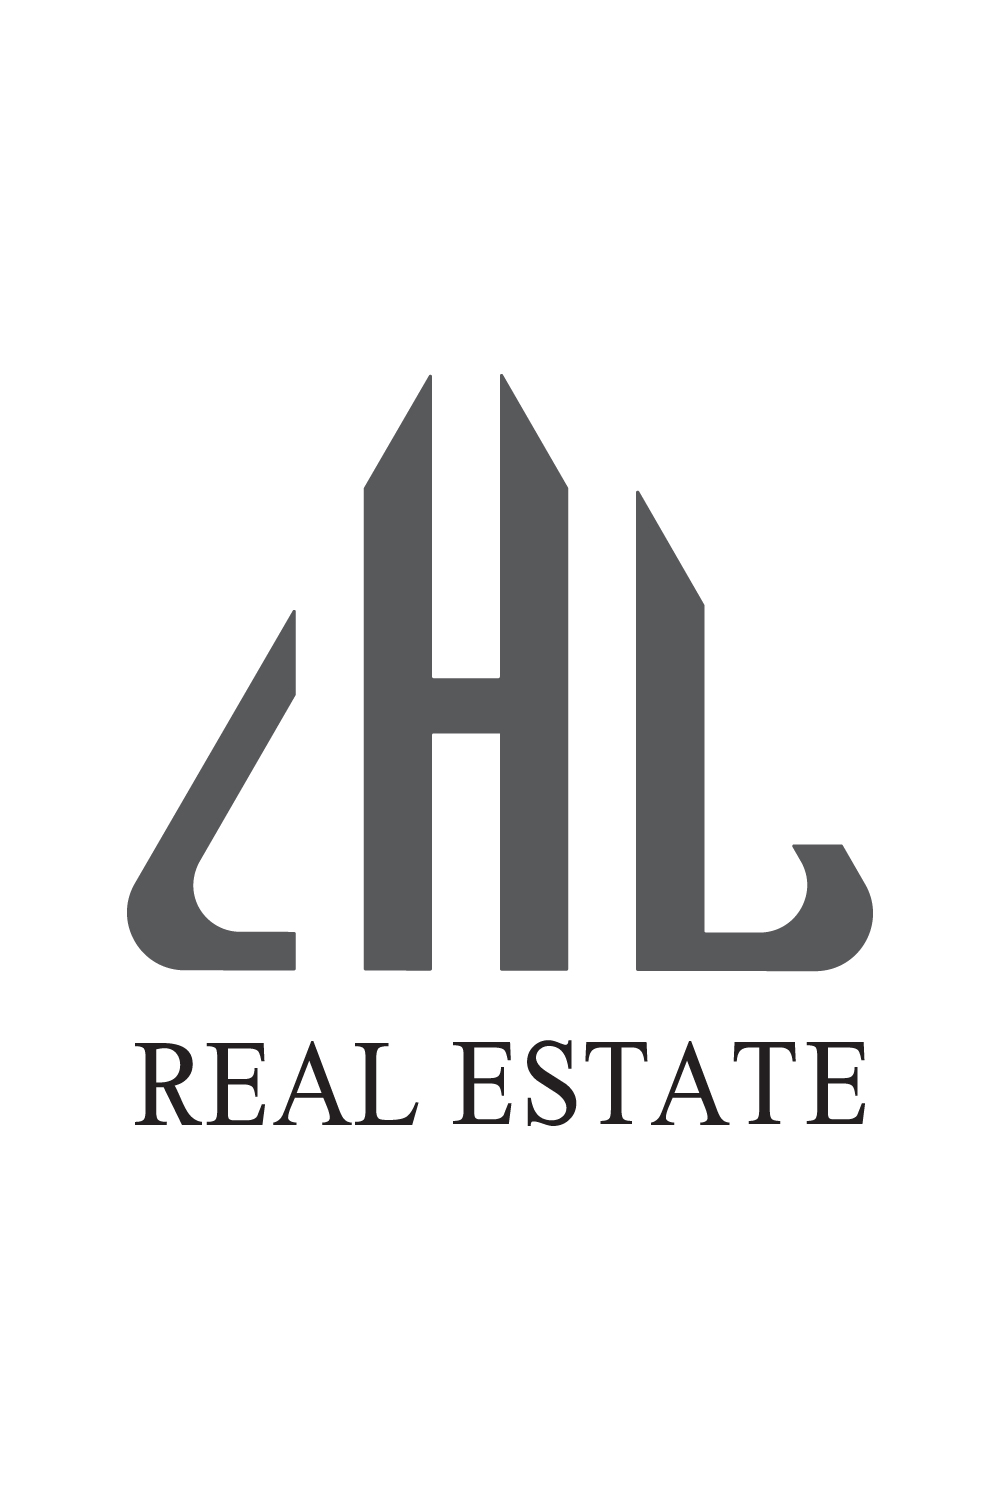 Luxury Real Estate Logo design vector icon design LHB Real Estate logo design black color Real Estate LHB logo Premium vector illustration pinterest preview image.